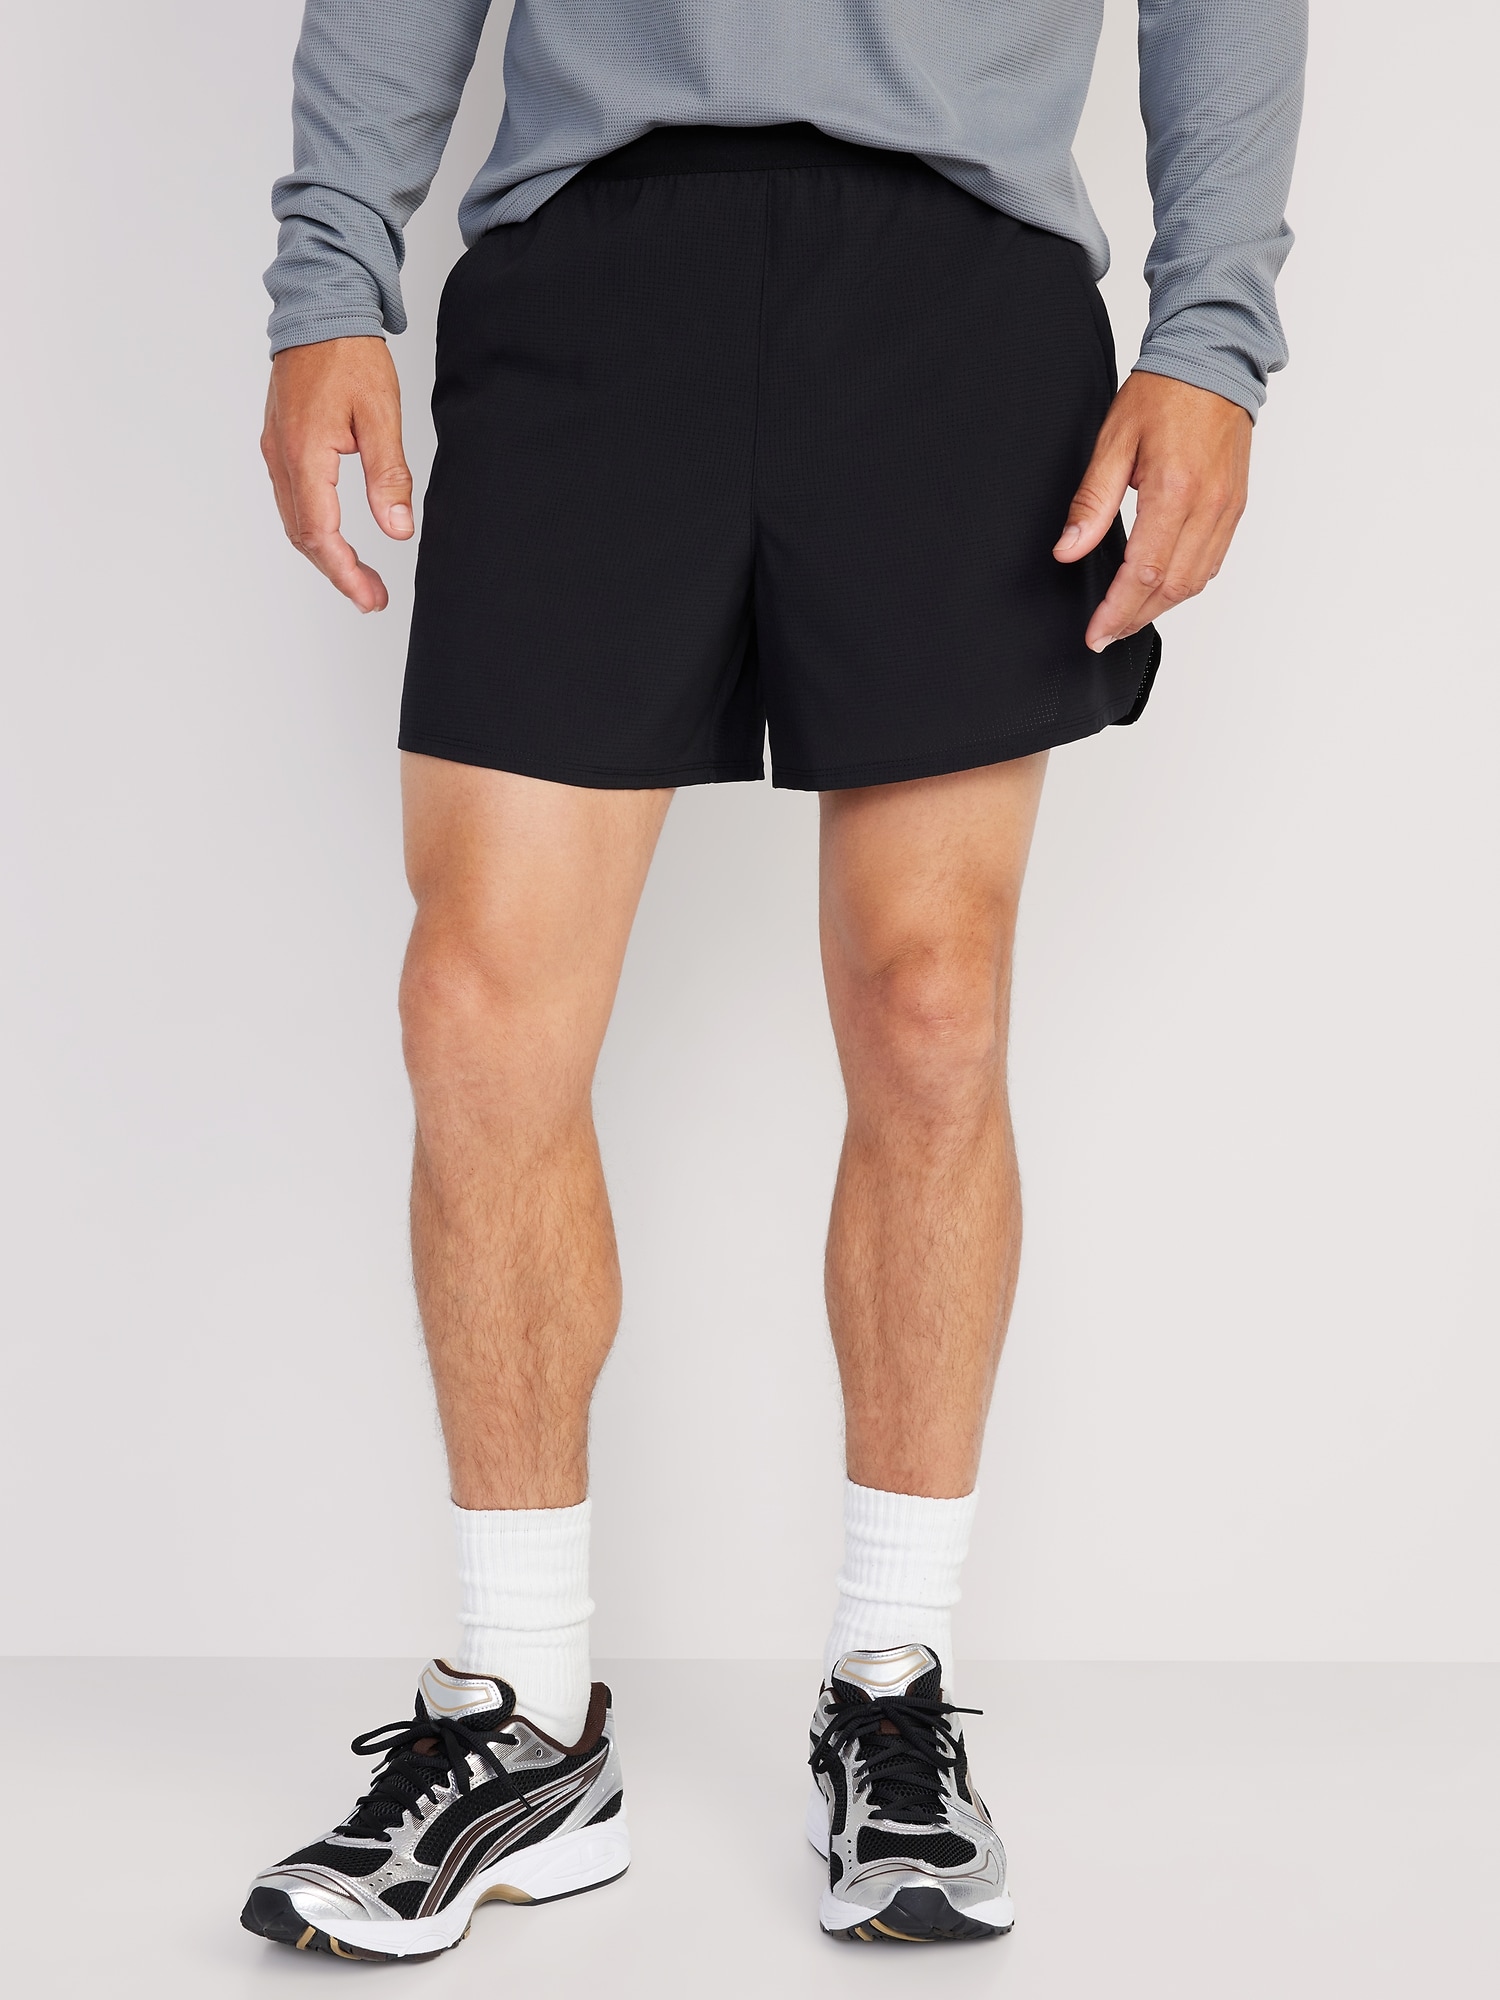 Old Navy Men's Stretchtech Lined Run Shorts -- 5-Inch Inseam Black Regular Size M